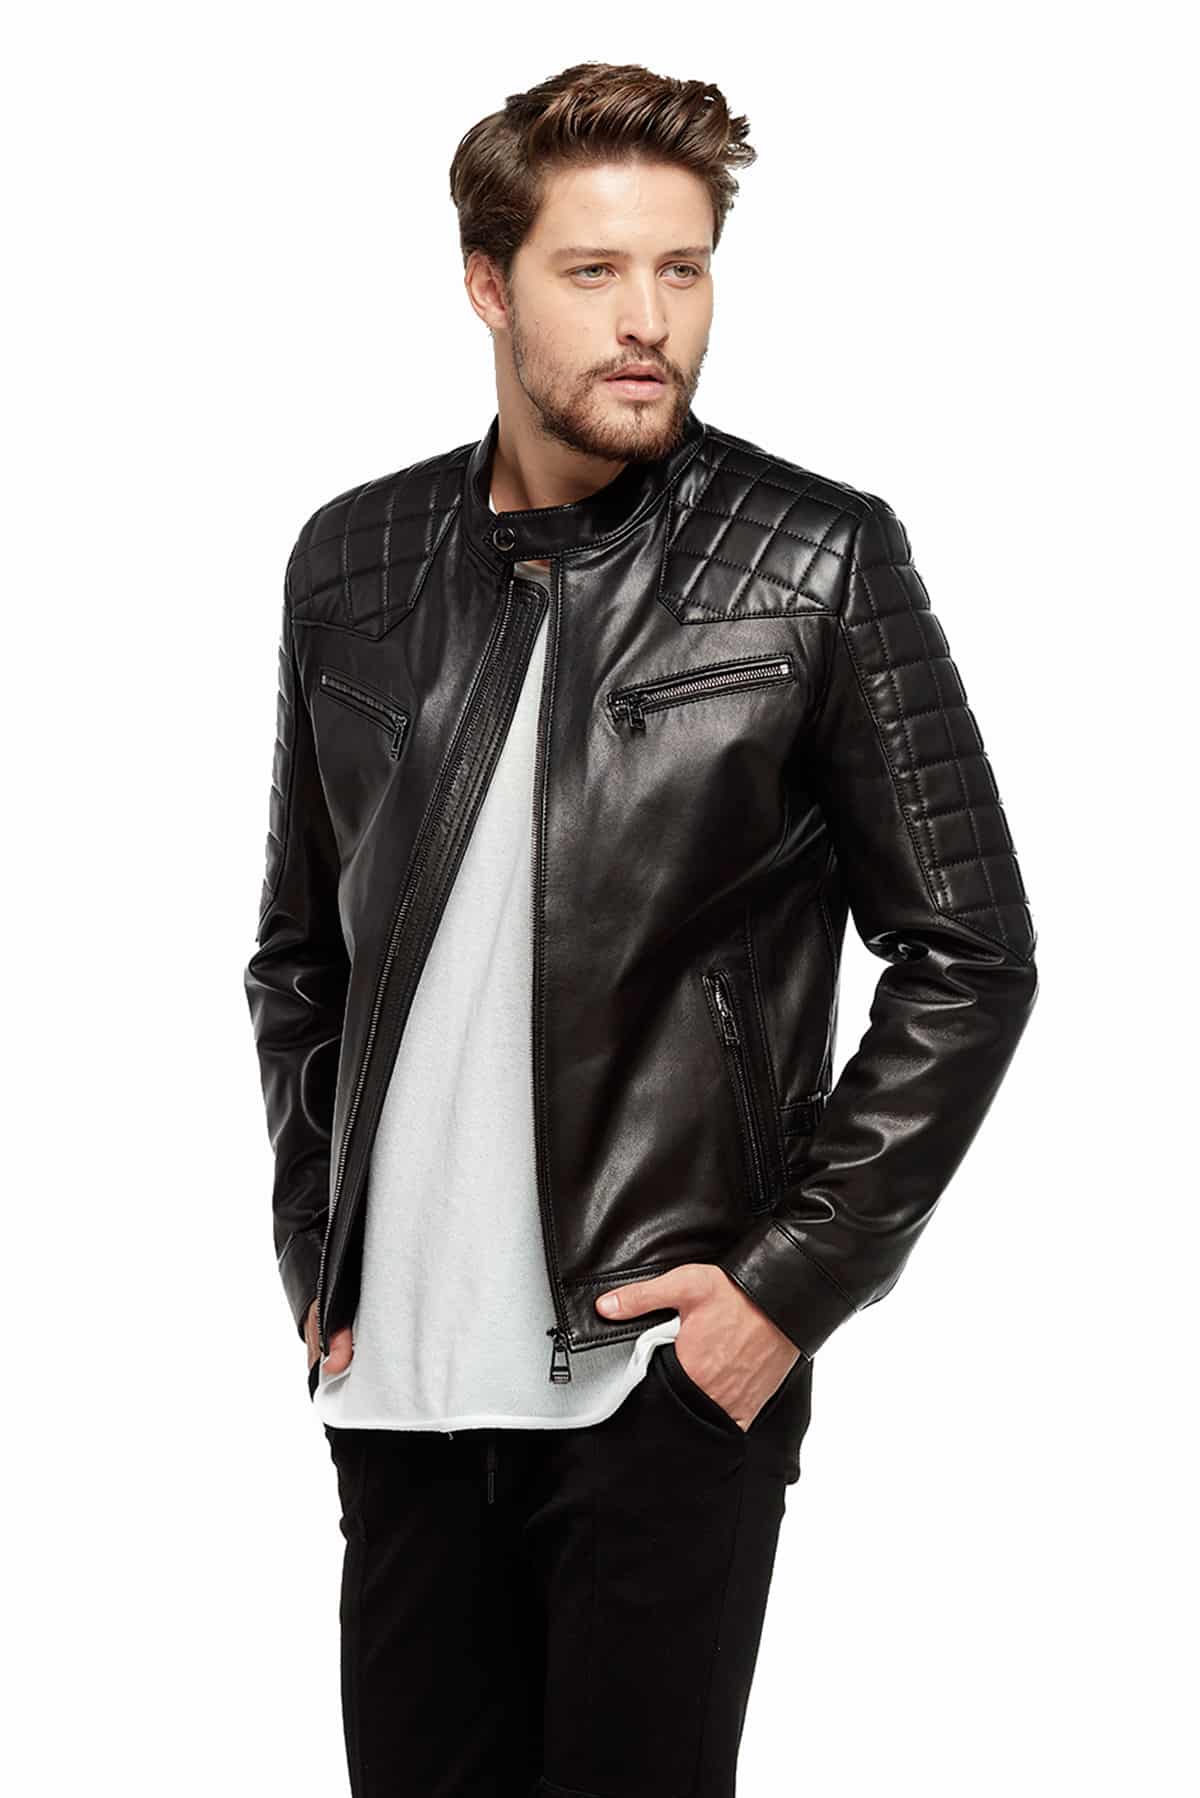 genuine leather jacket brands